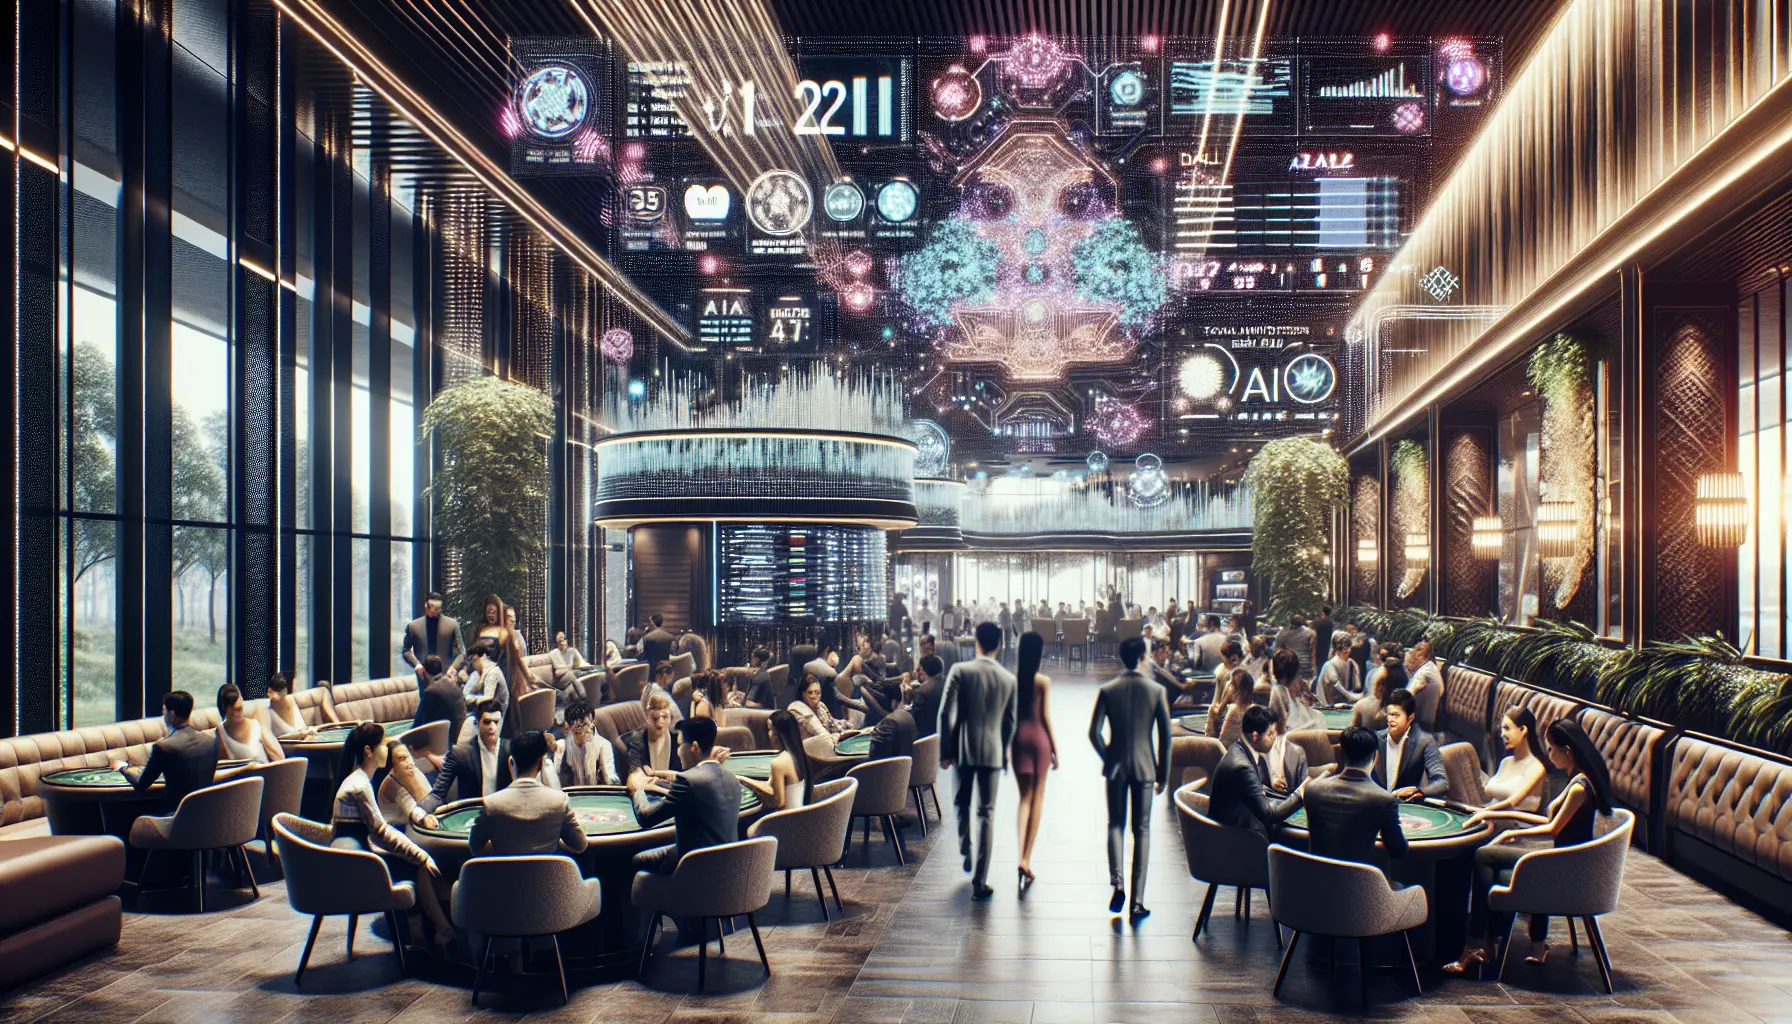 Modern casino experience enhanced by AI technology